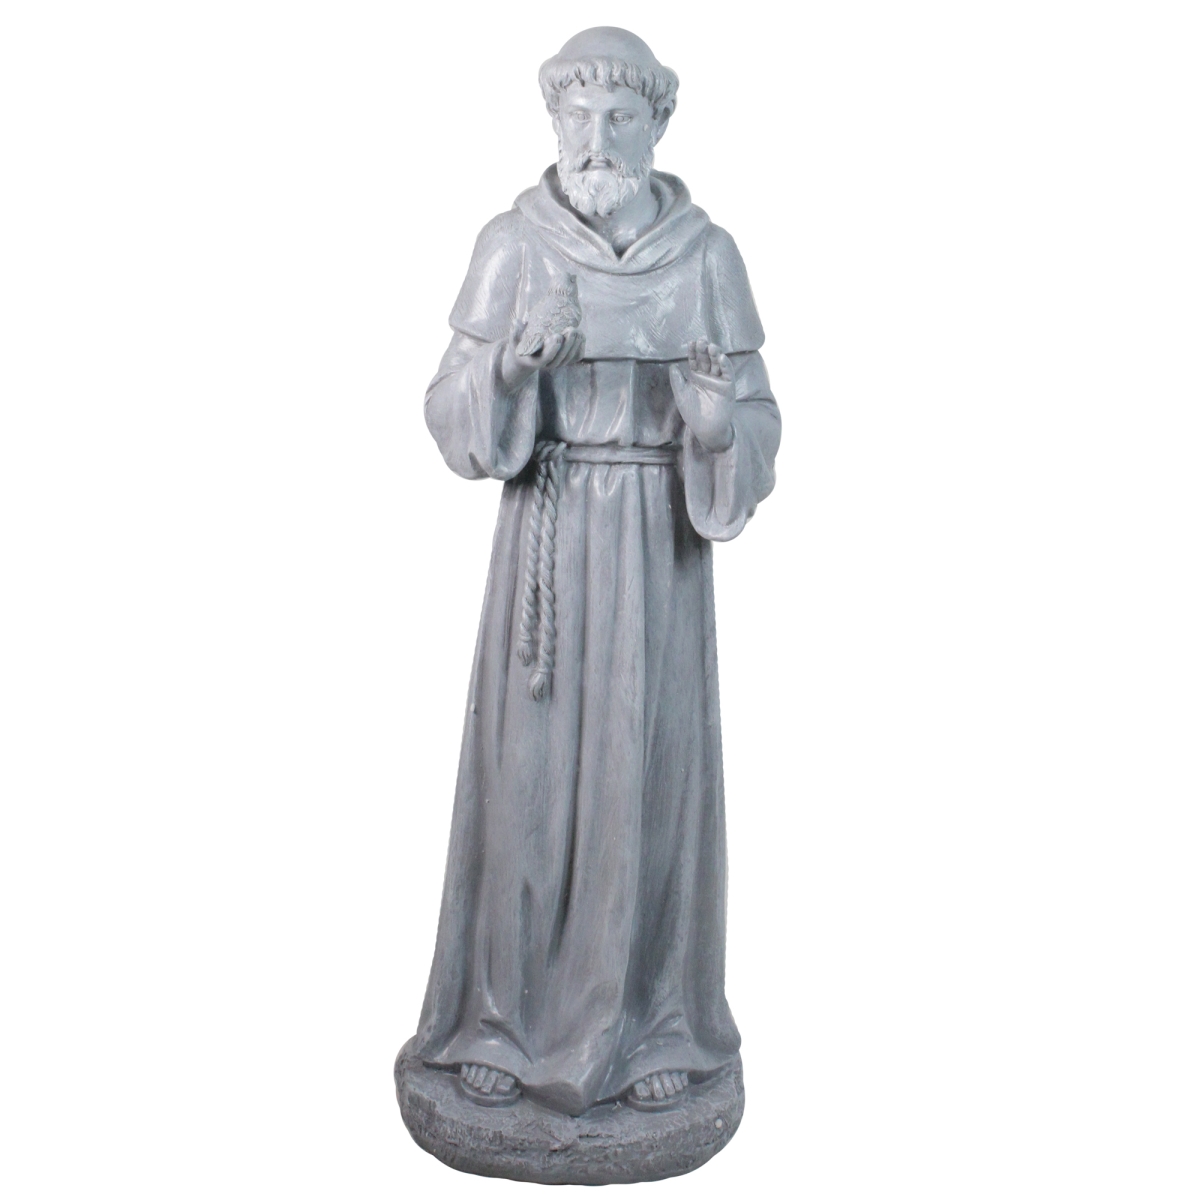 33377766 28 In. St. Francis Holding A Bird Outdoor Garden Statue